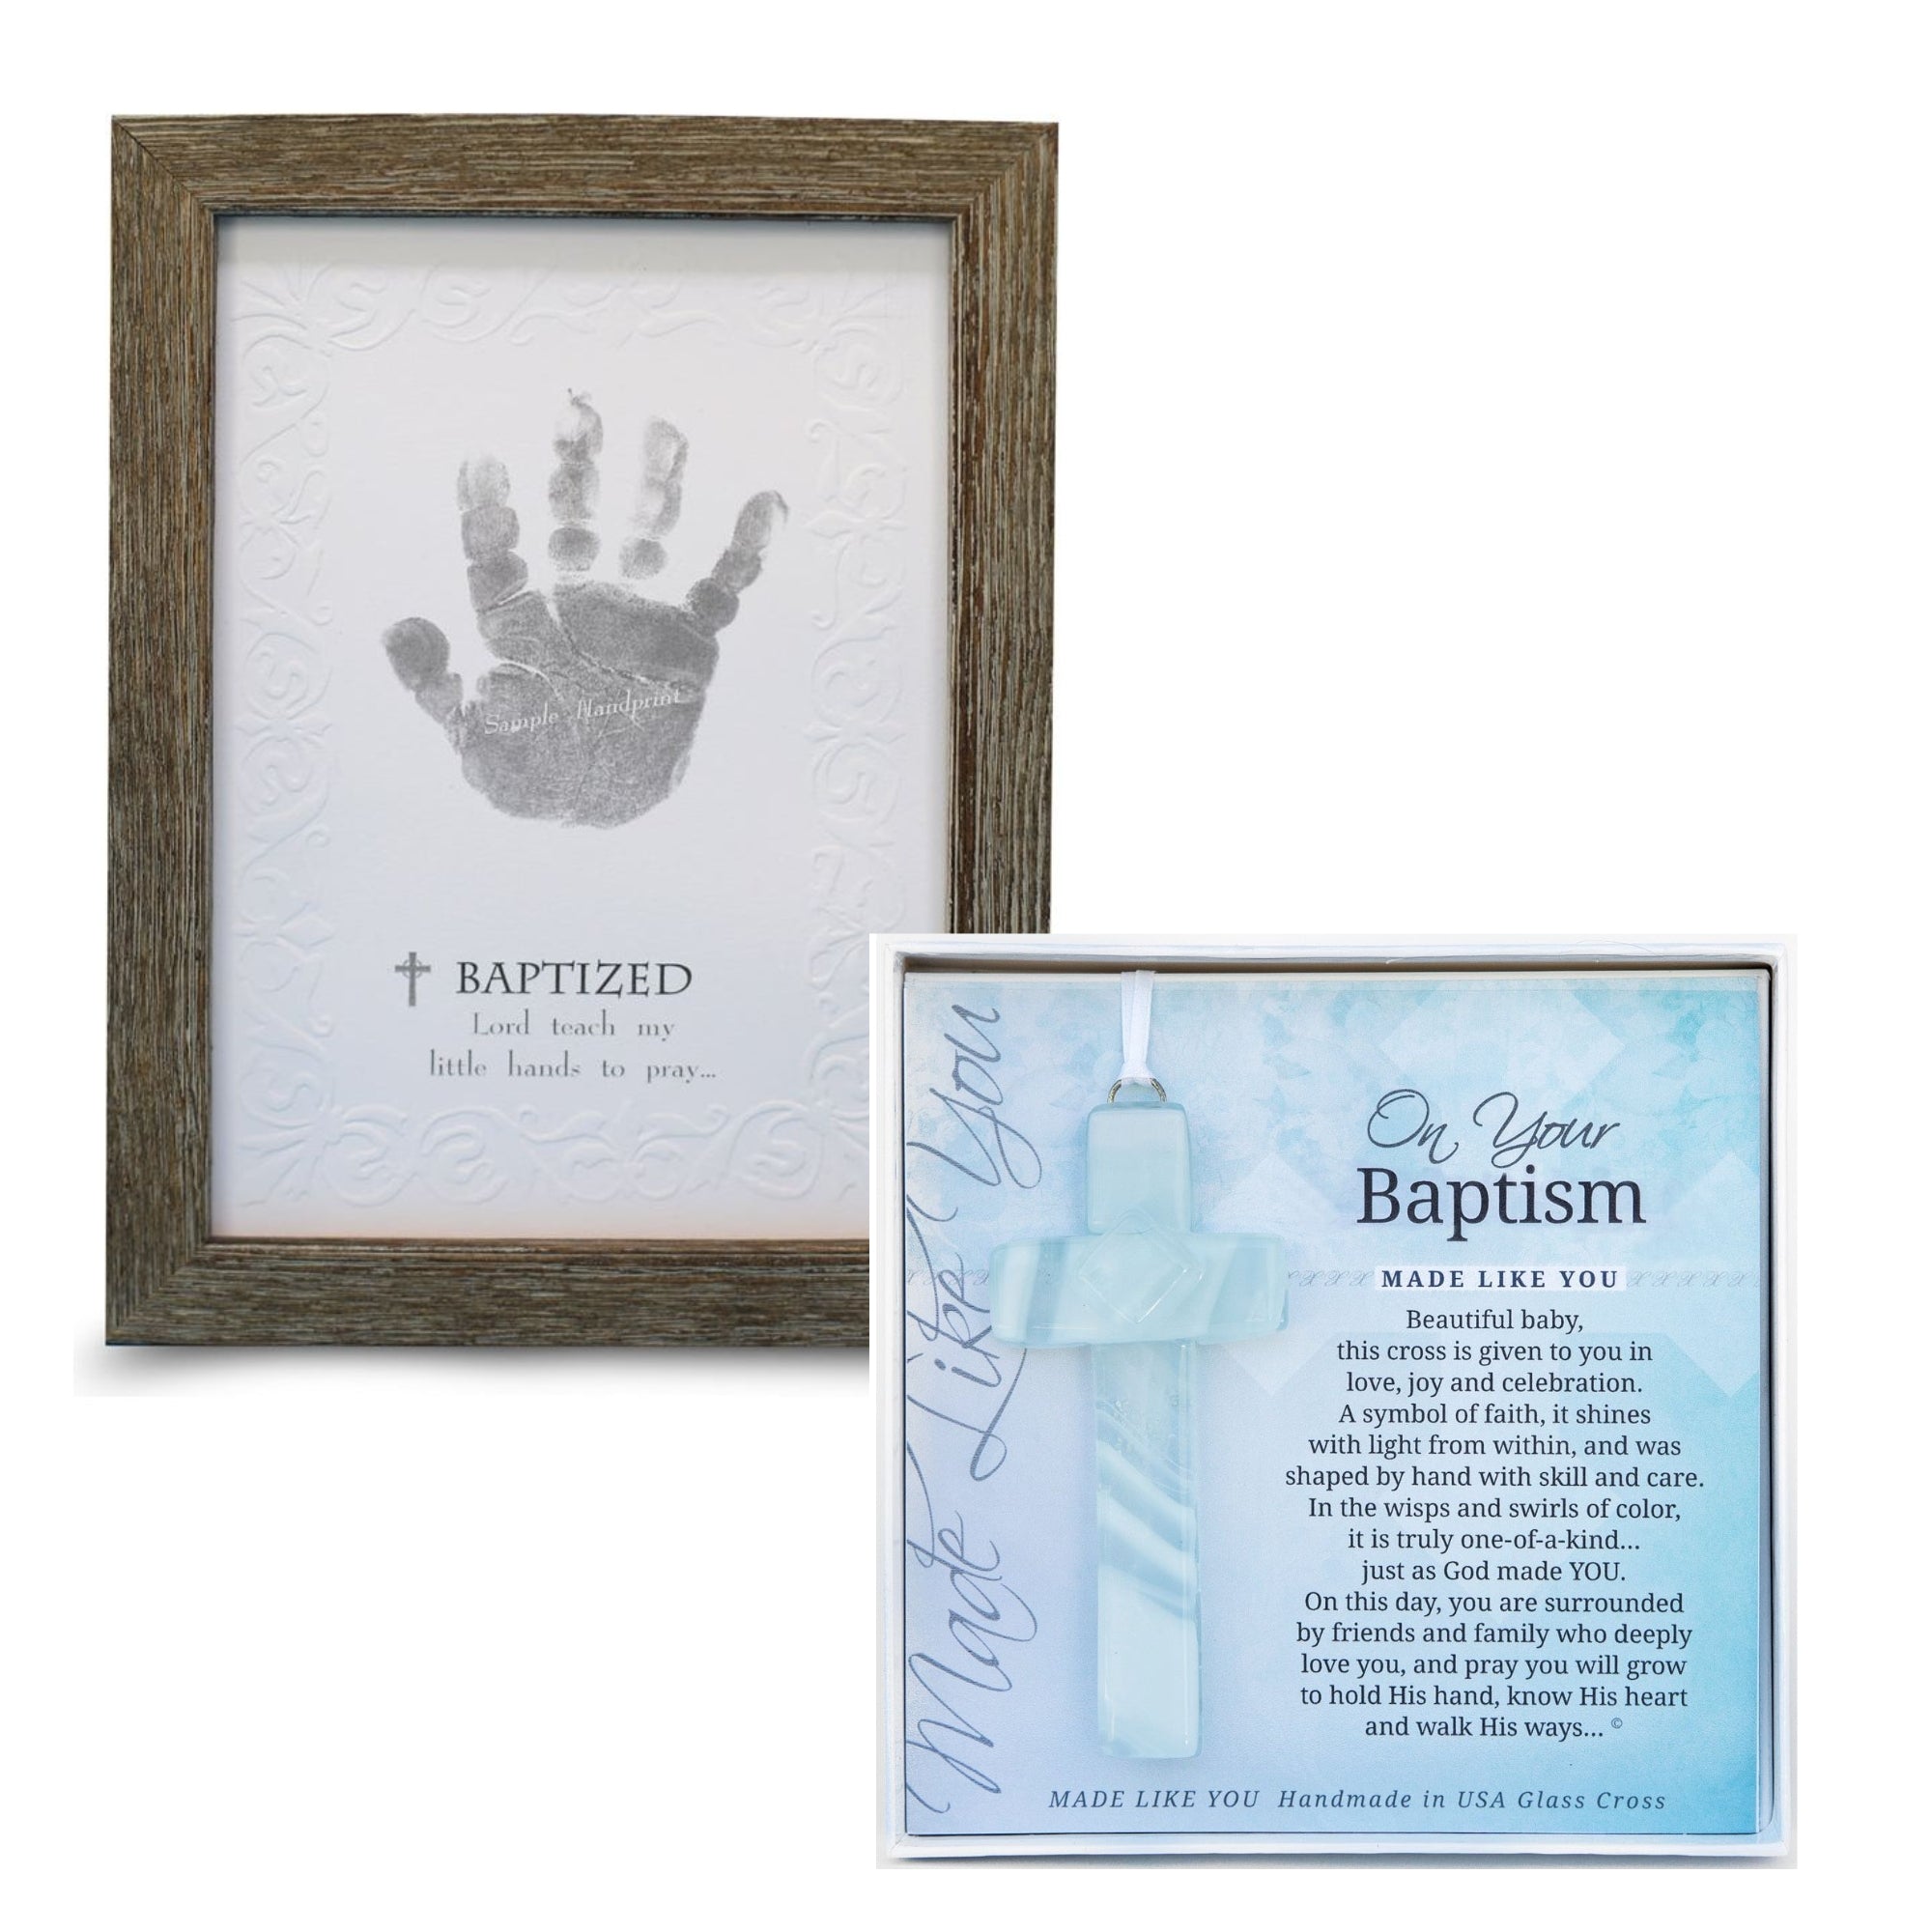 Baptism Gift Set with keepsake handprint frame and On Your Baptism cross and sentiment.